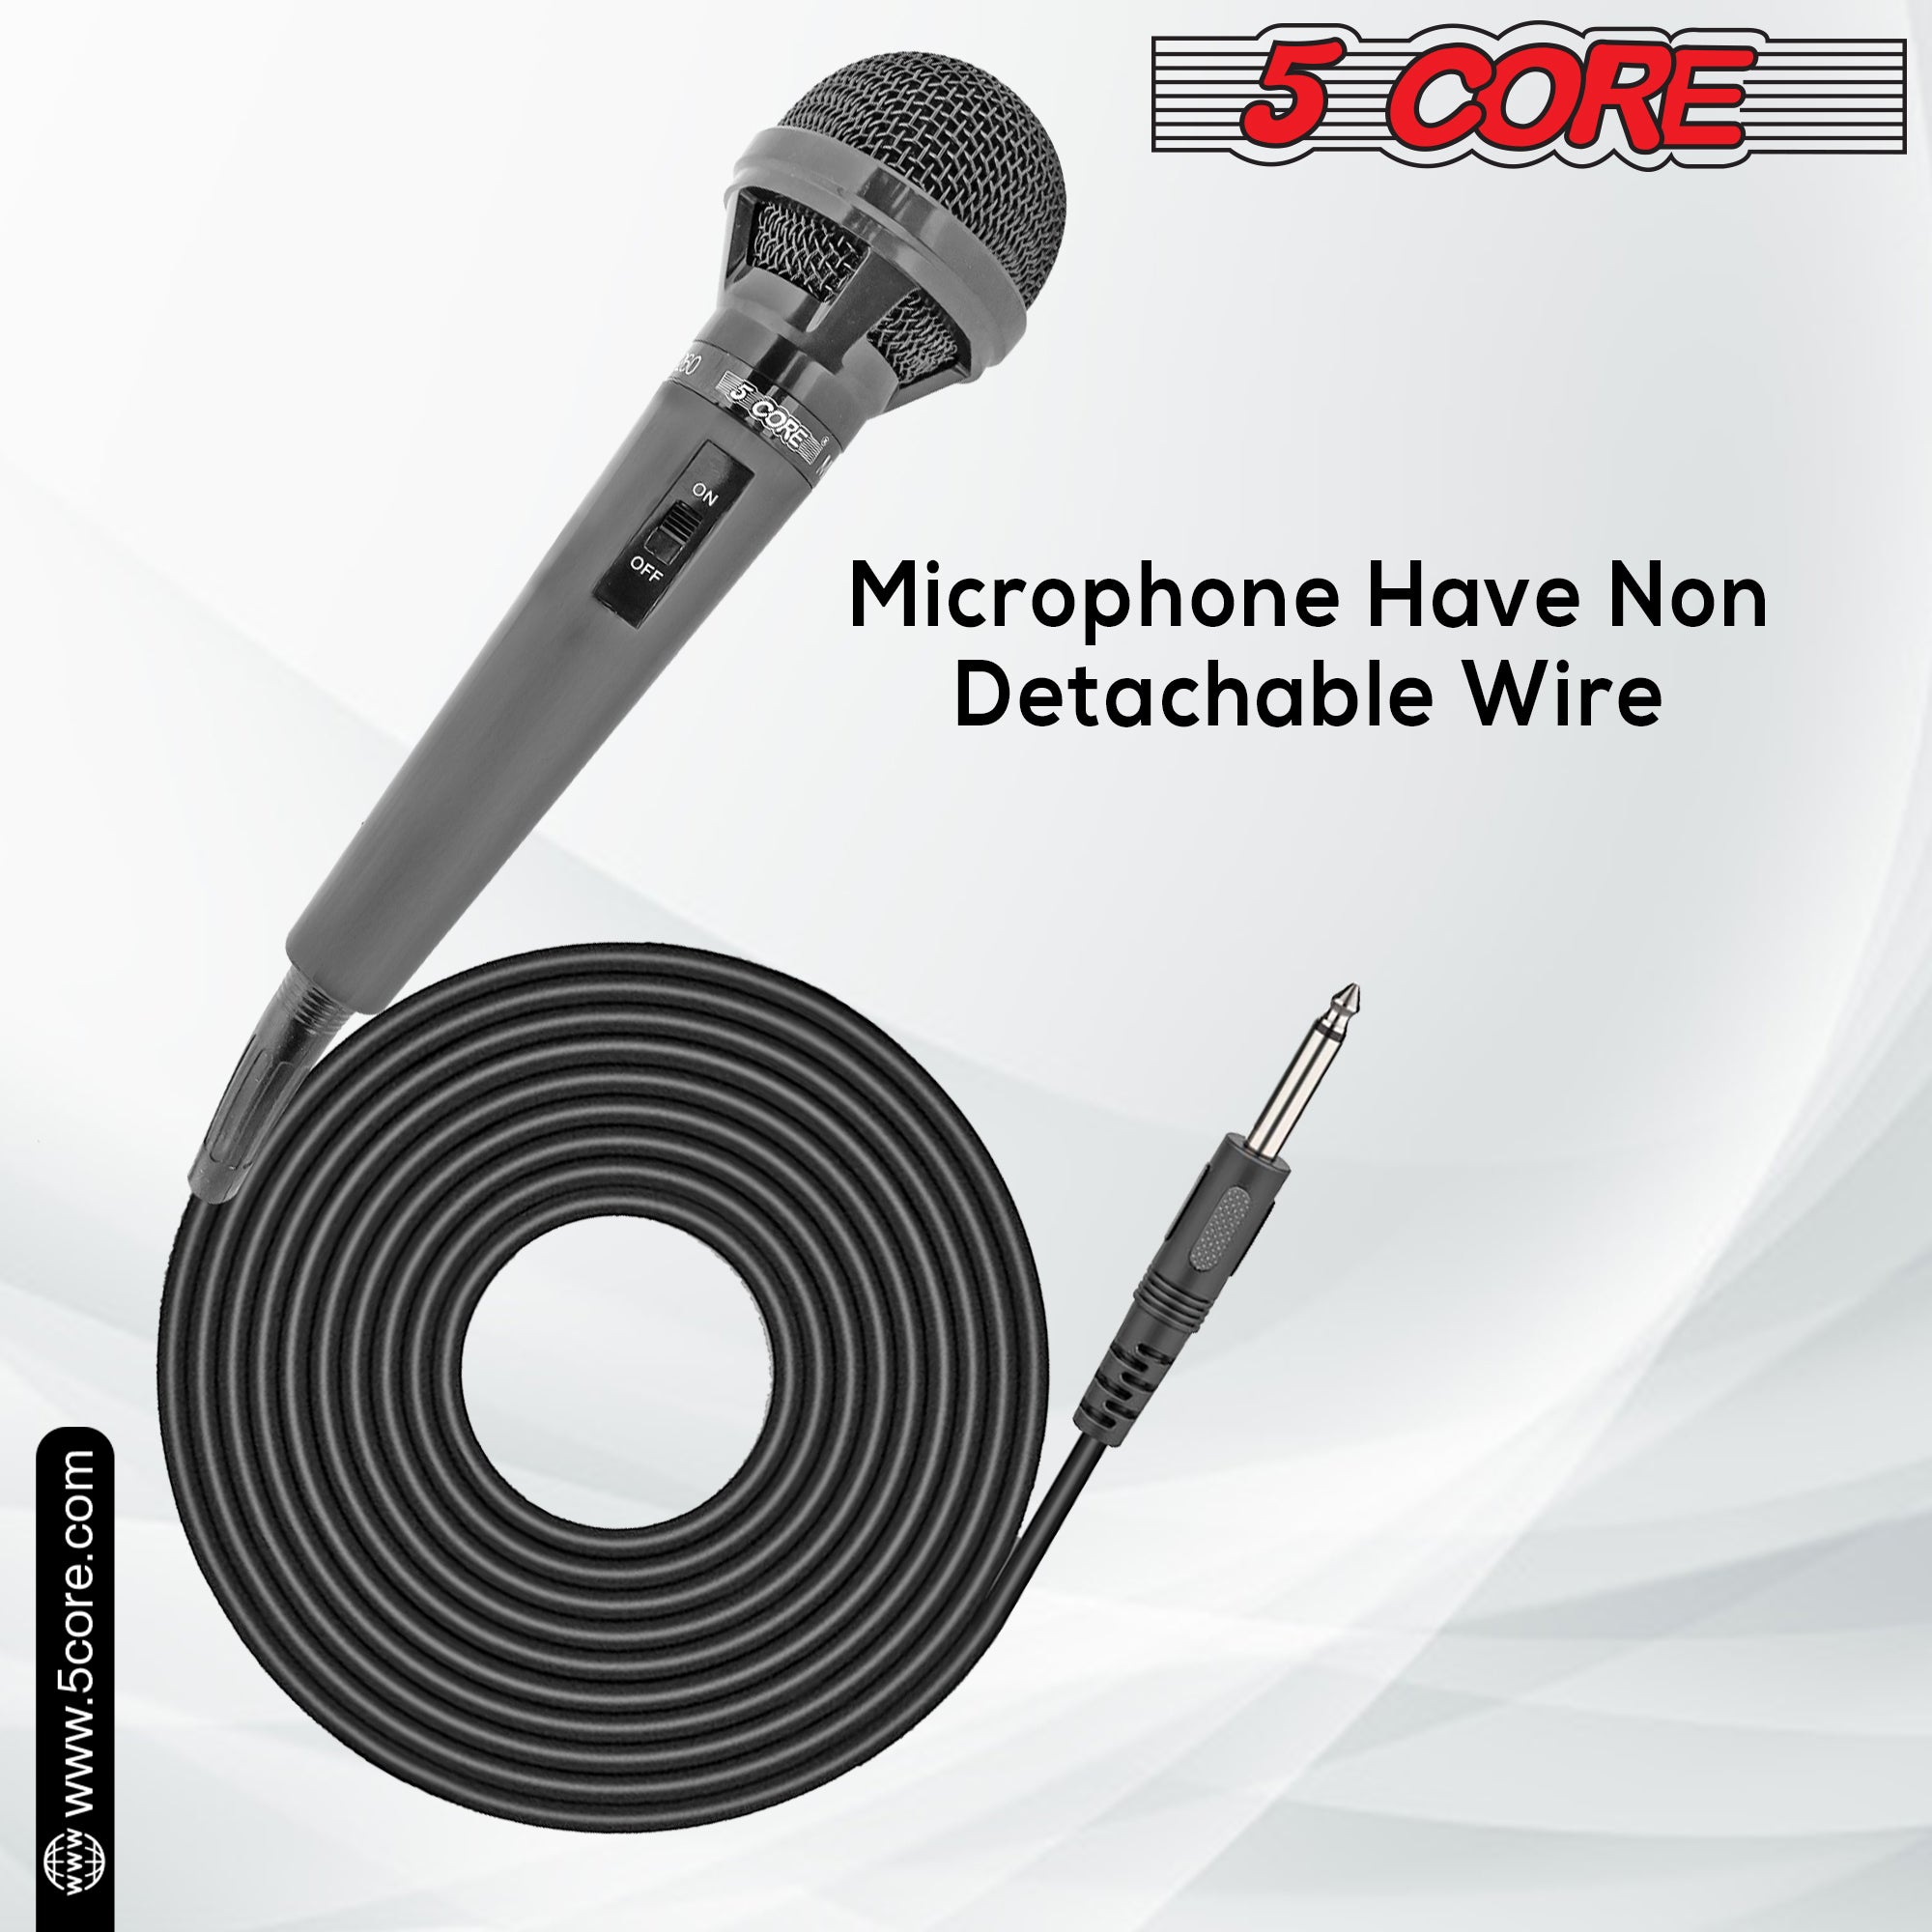 microphone have non detachable wire